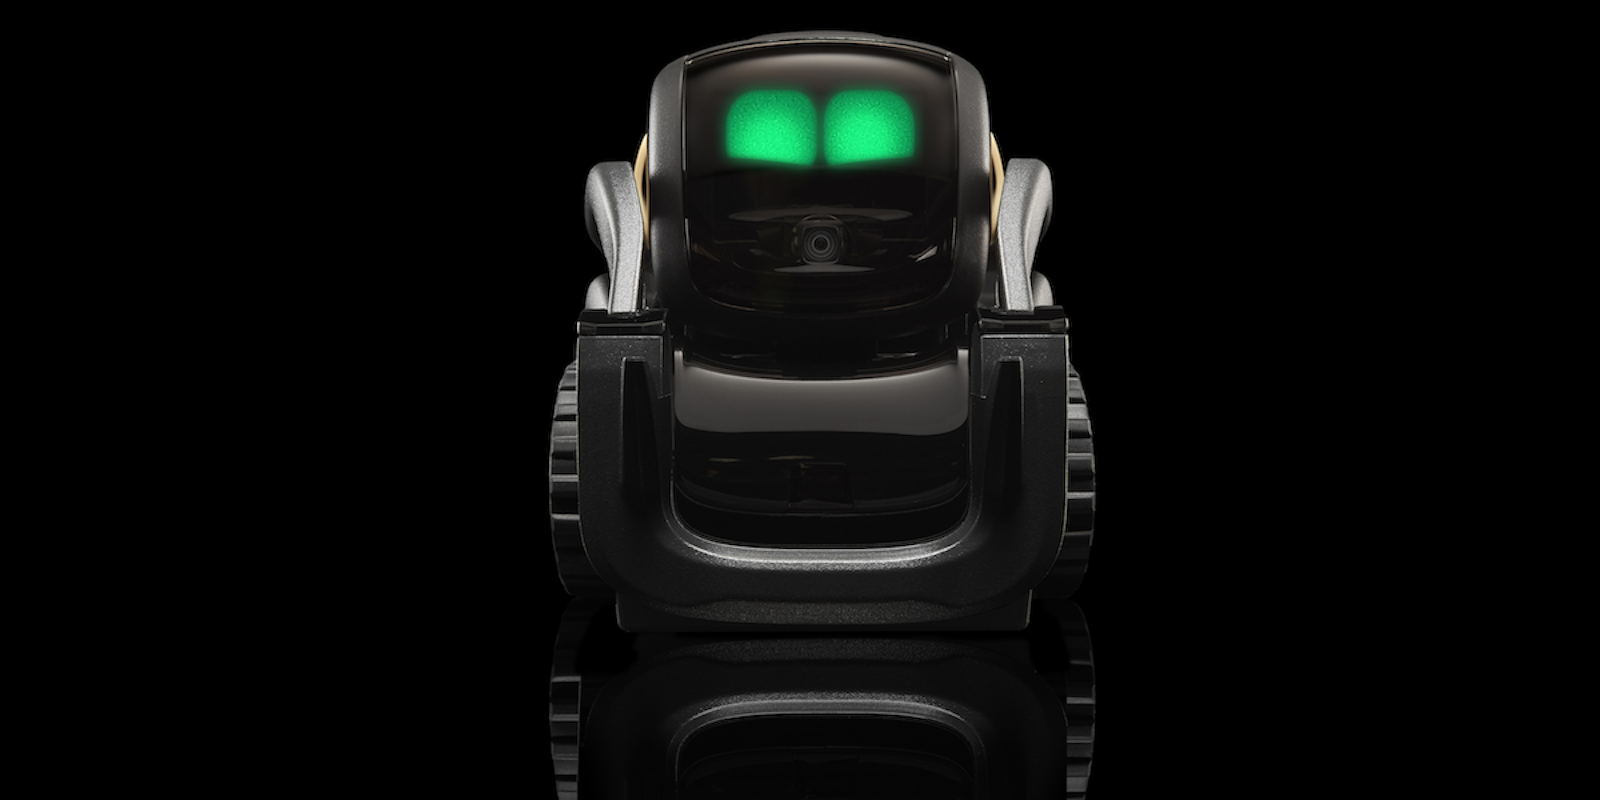 Anki Vector robot on black